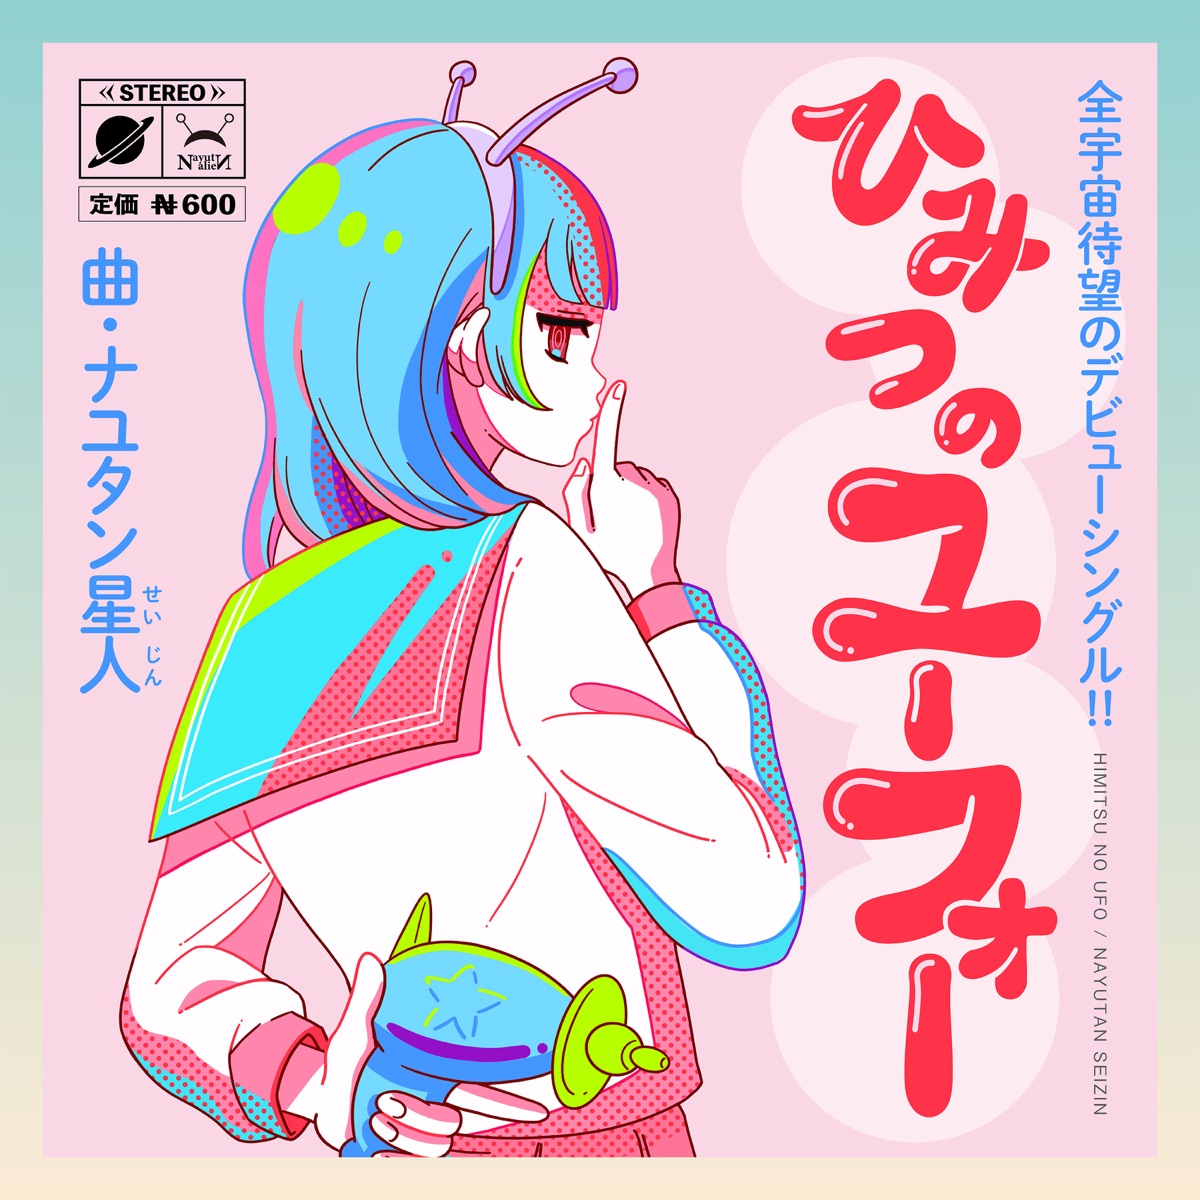 Cover art for『NayutalieN - ひみつのユーフォー』from the release『Secret UFO